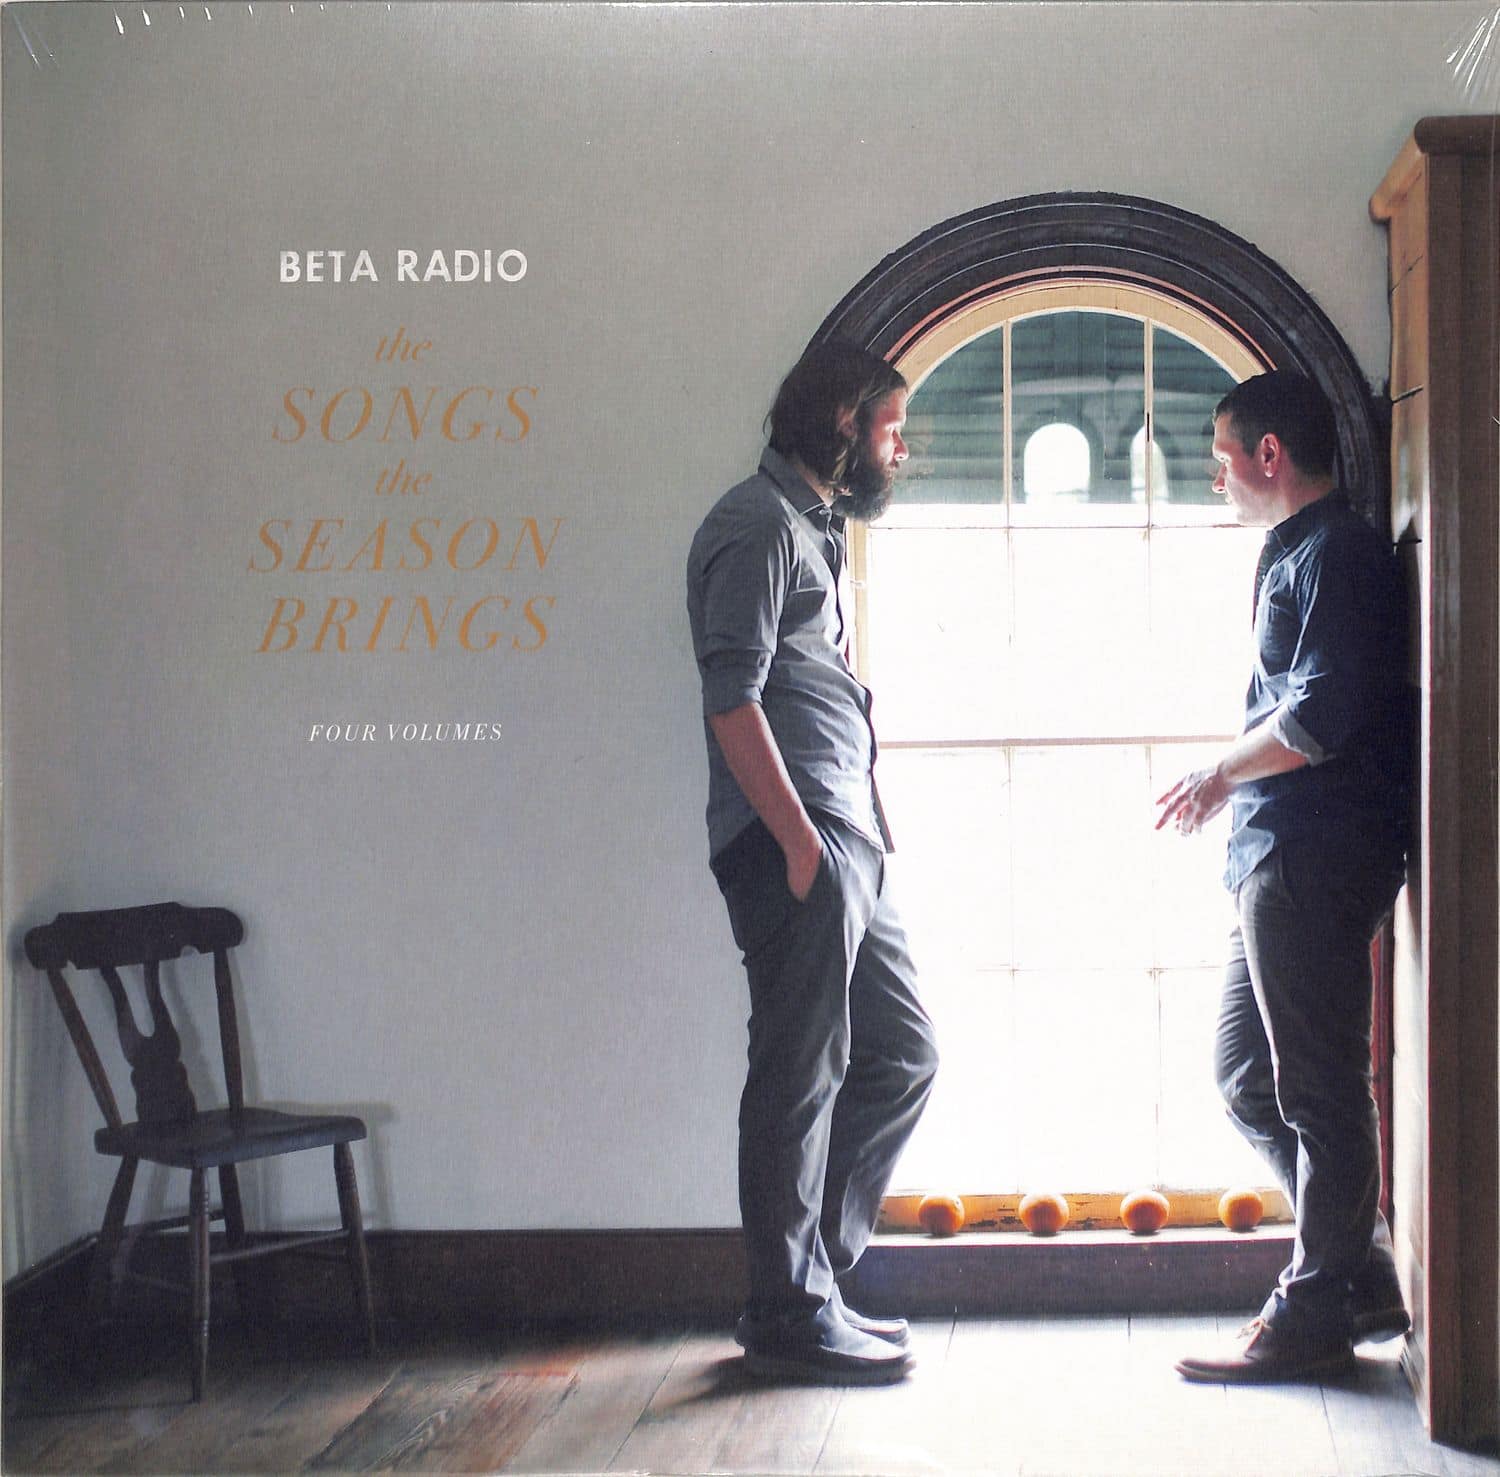 Beta Radio - THE SONGS THE SEASON BRING, VOLS. 1-4 